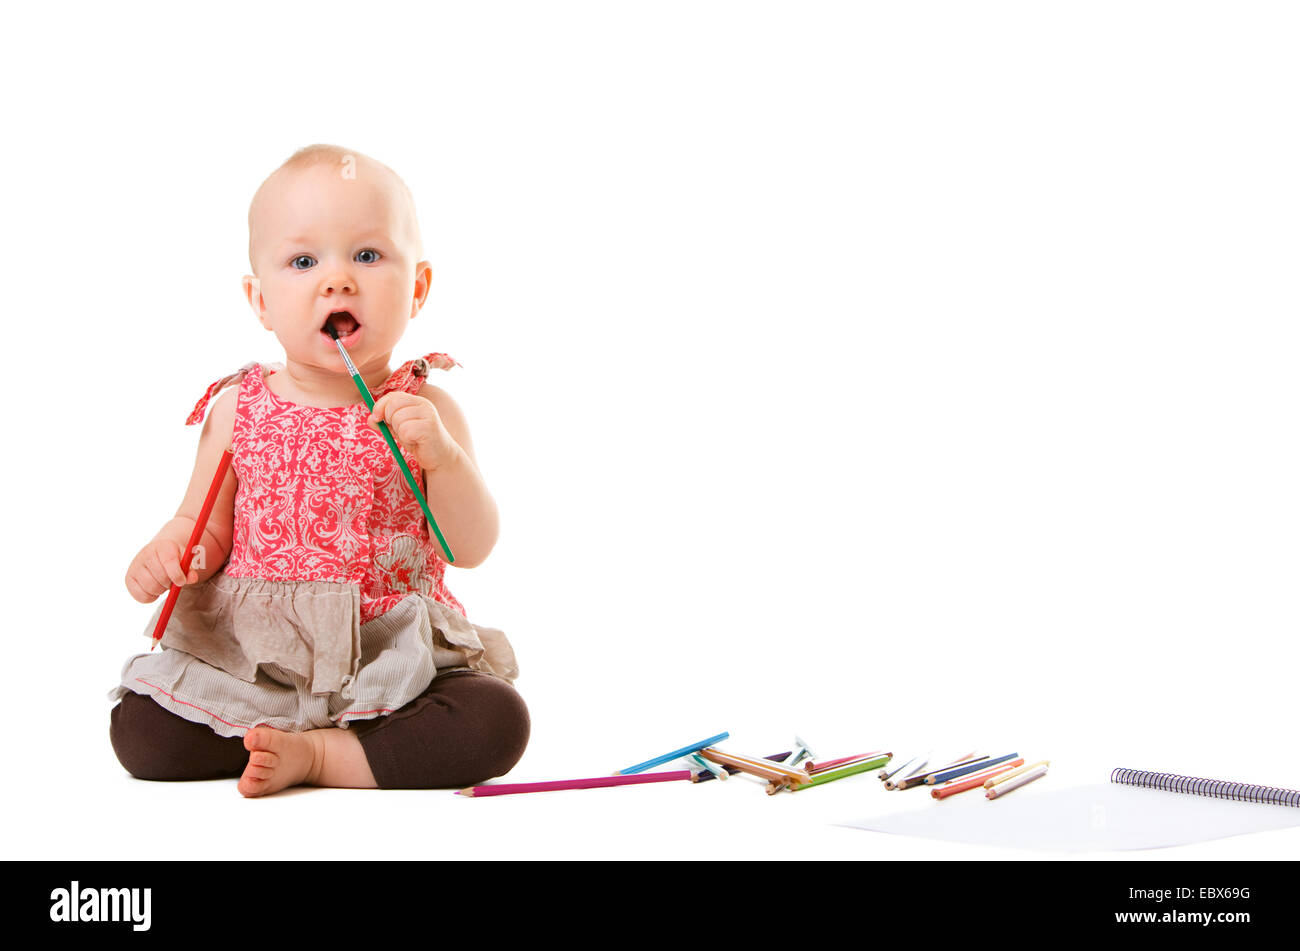 Carino Baby girl holding spazzola di pittura Foto Stock